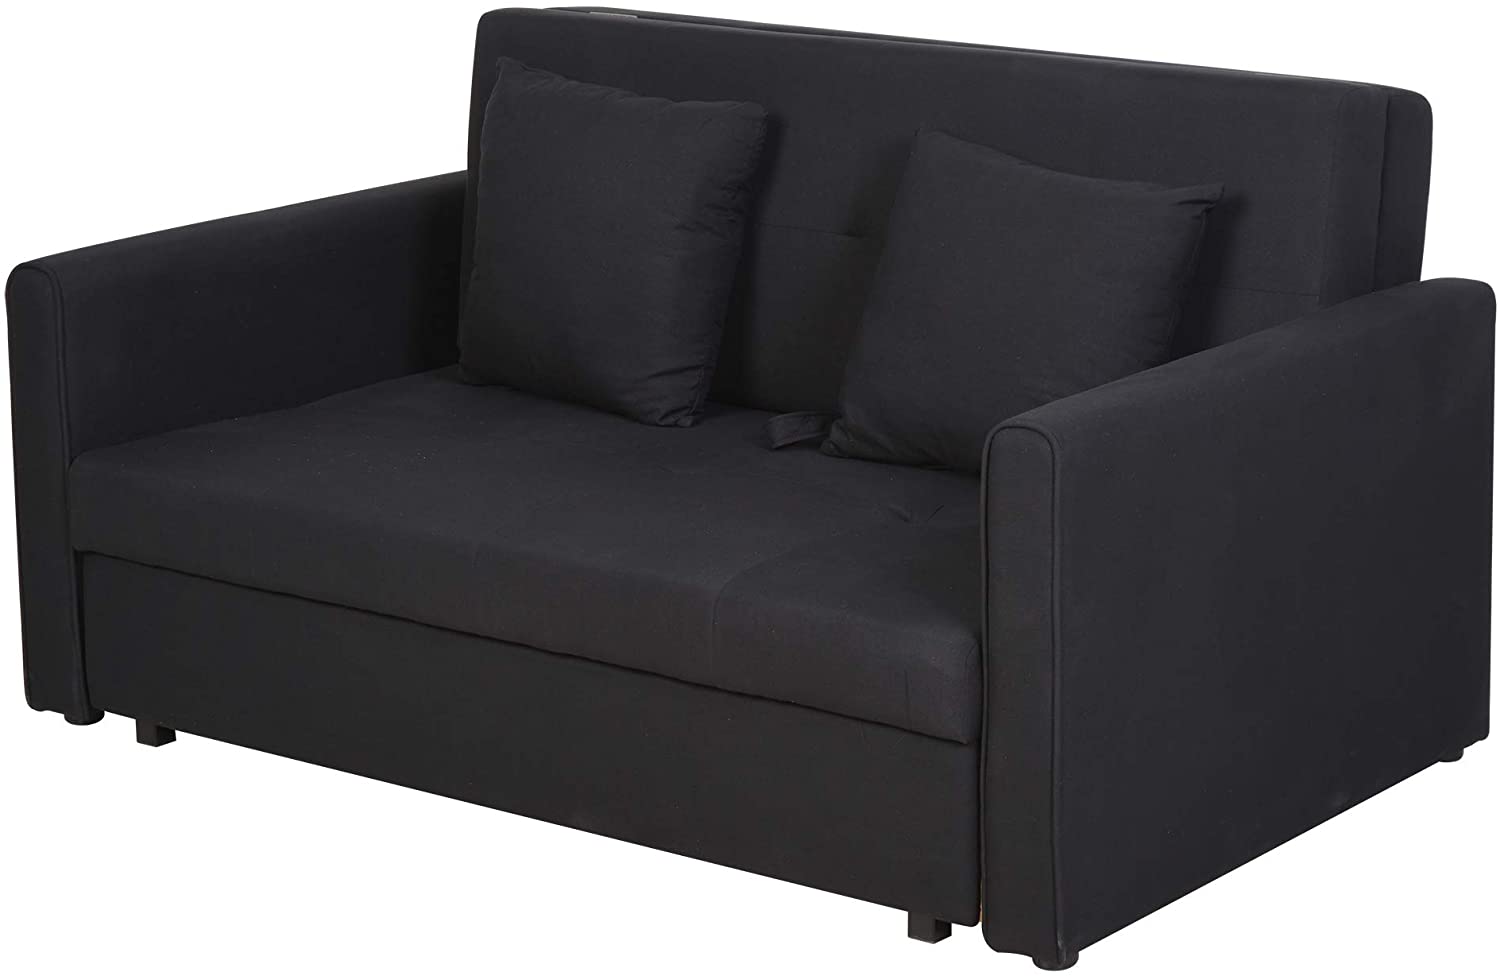 HOMCOM 2-Seater Fabric Sofa Bed with Storage